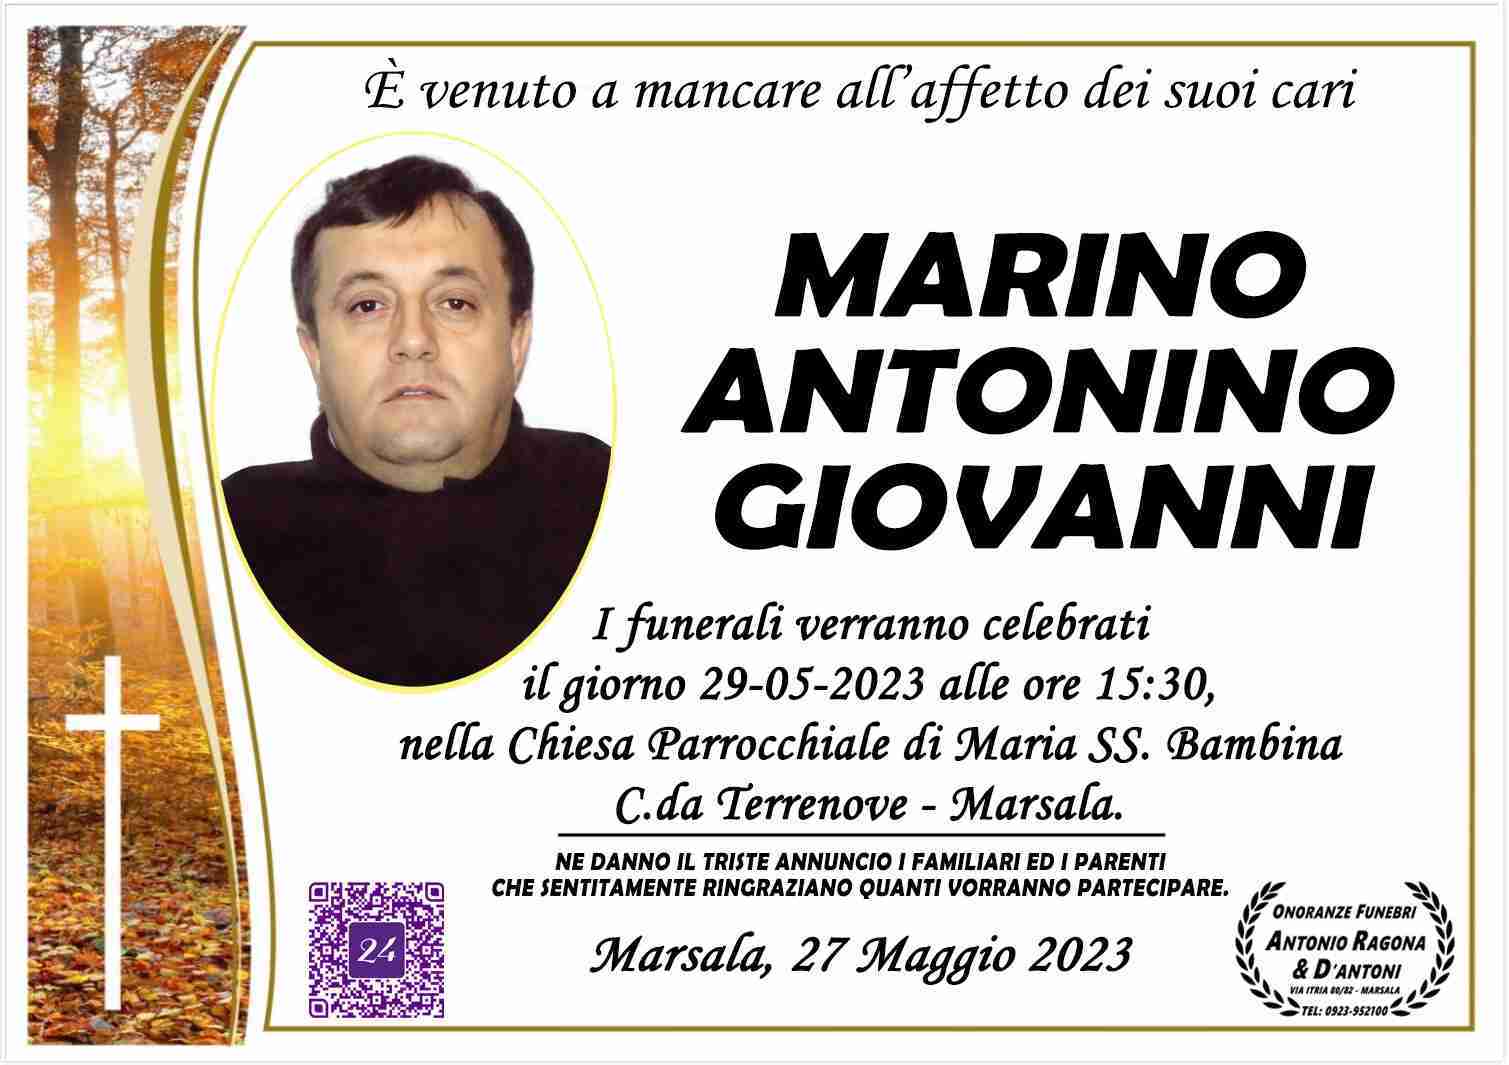 Antonino Giovanni Marino